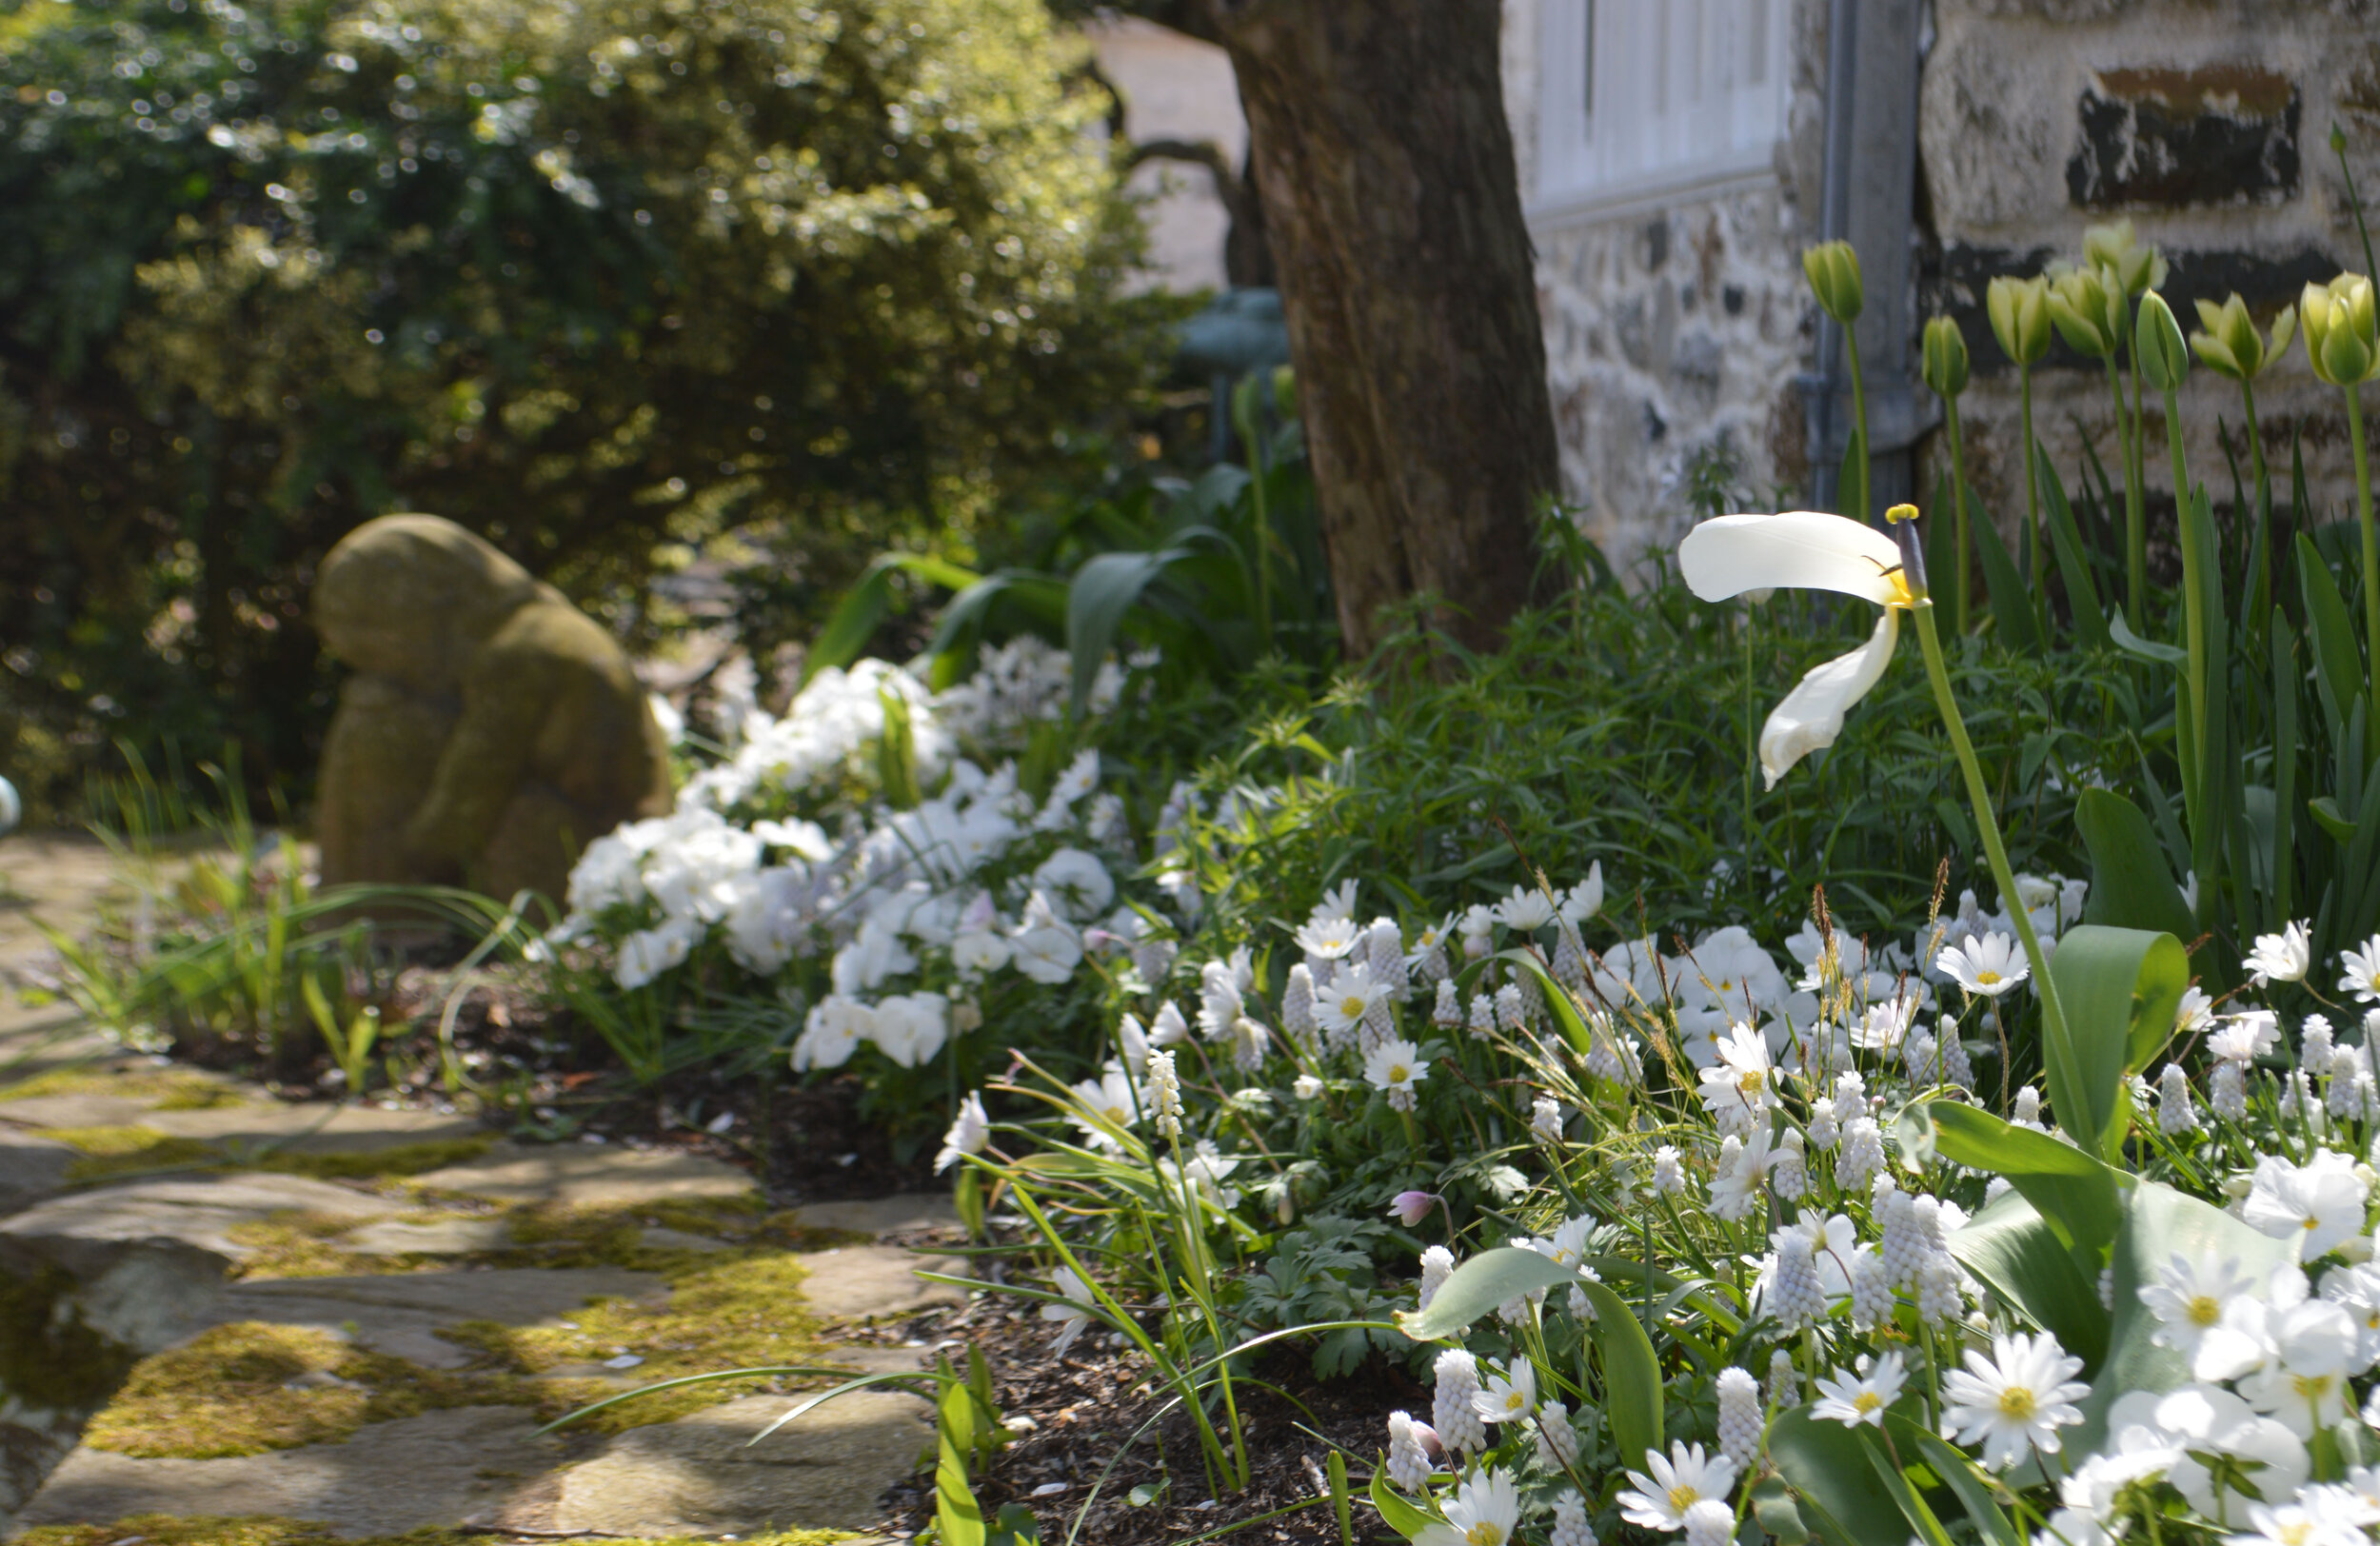  Anemone blanda 'White Splendor', Muscari 'Siberian Tiger', Tulip Spring Green, and Matrix white pansies brighten the shadows of the White Garden.   